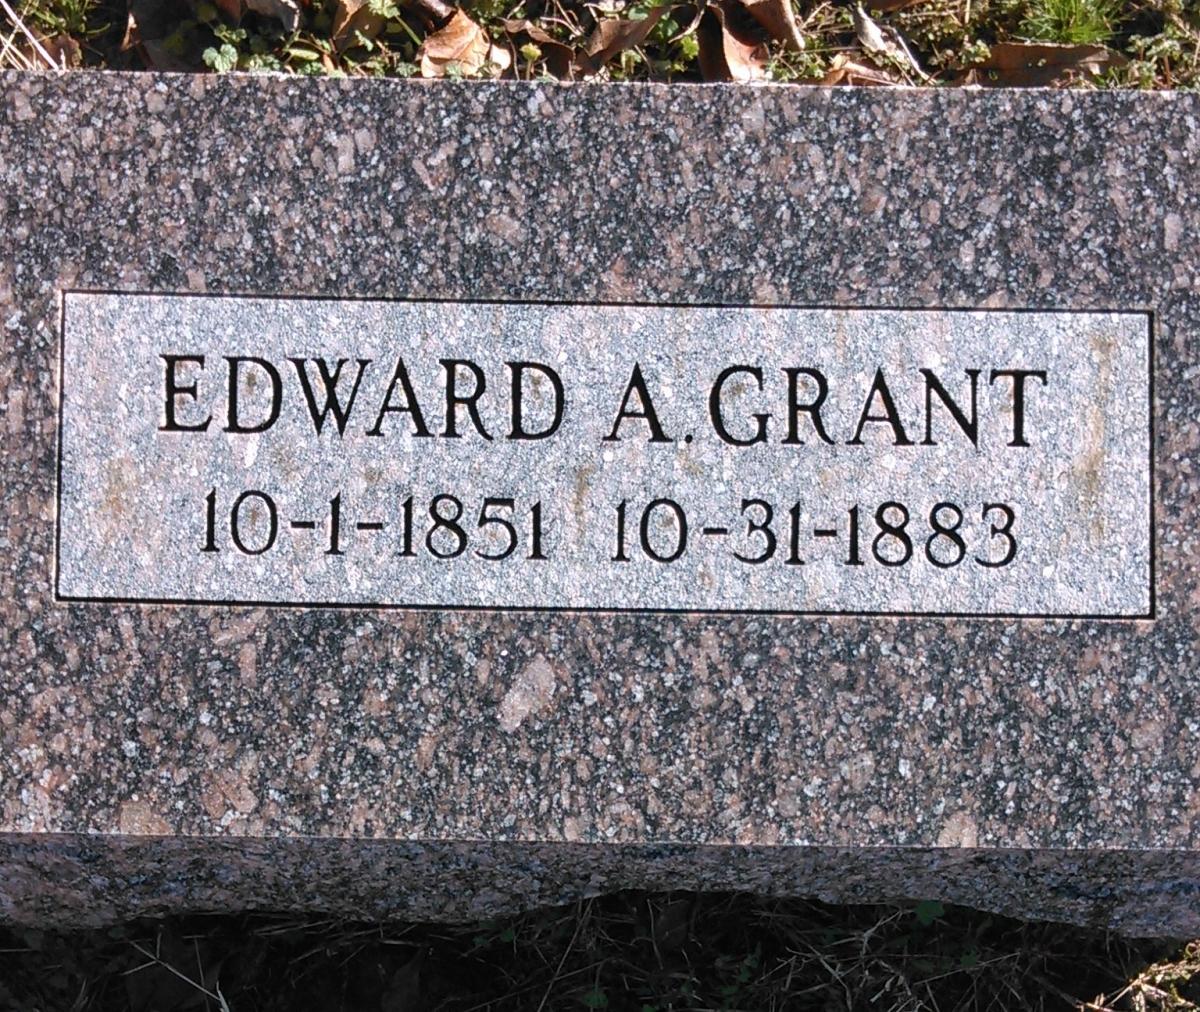 OK, Grove, Buzzard Cemetery, Grant, Edward A. Headstone